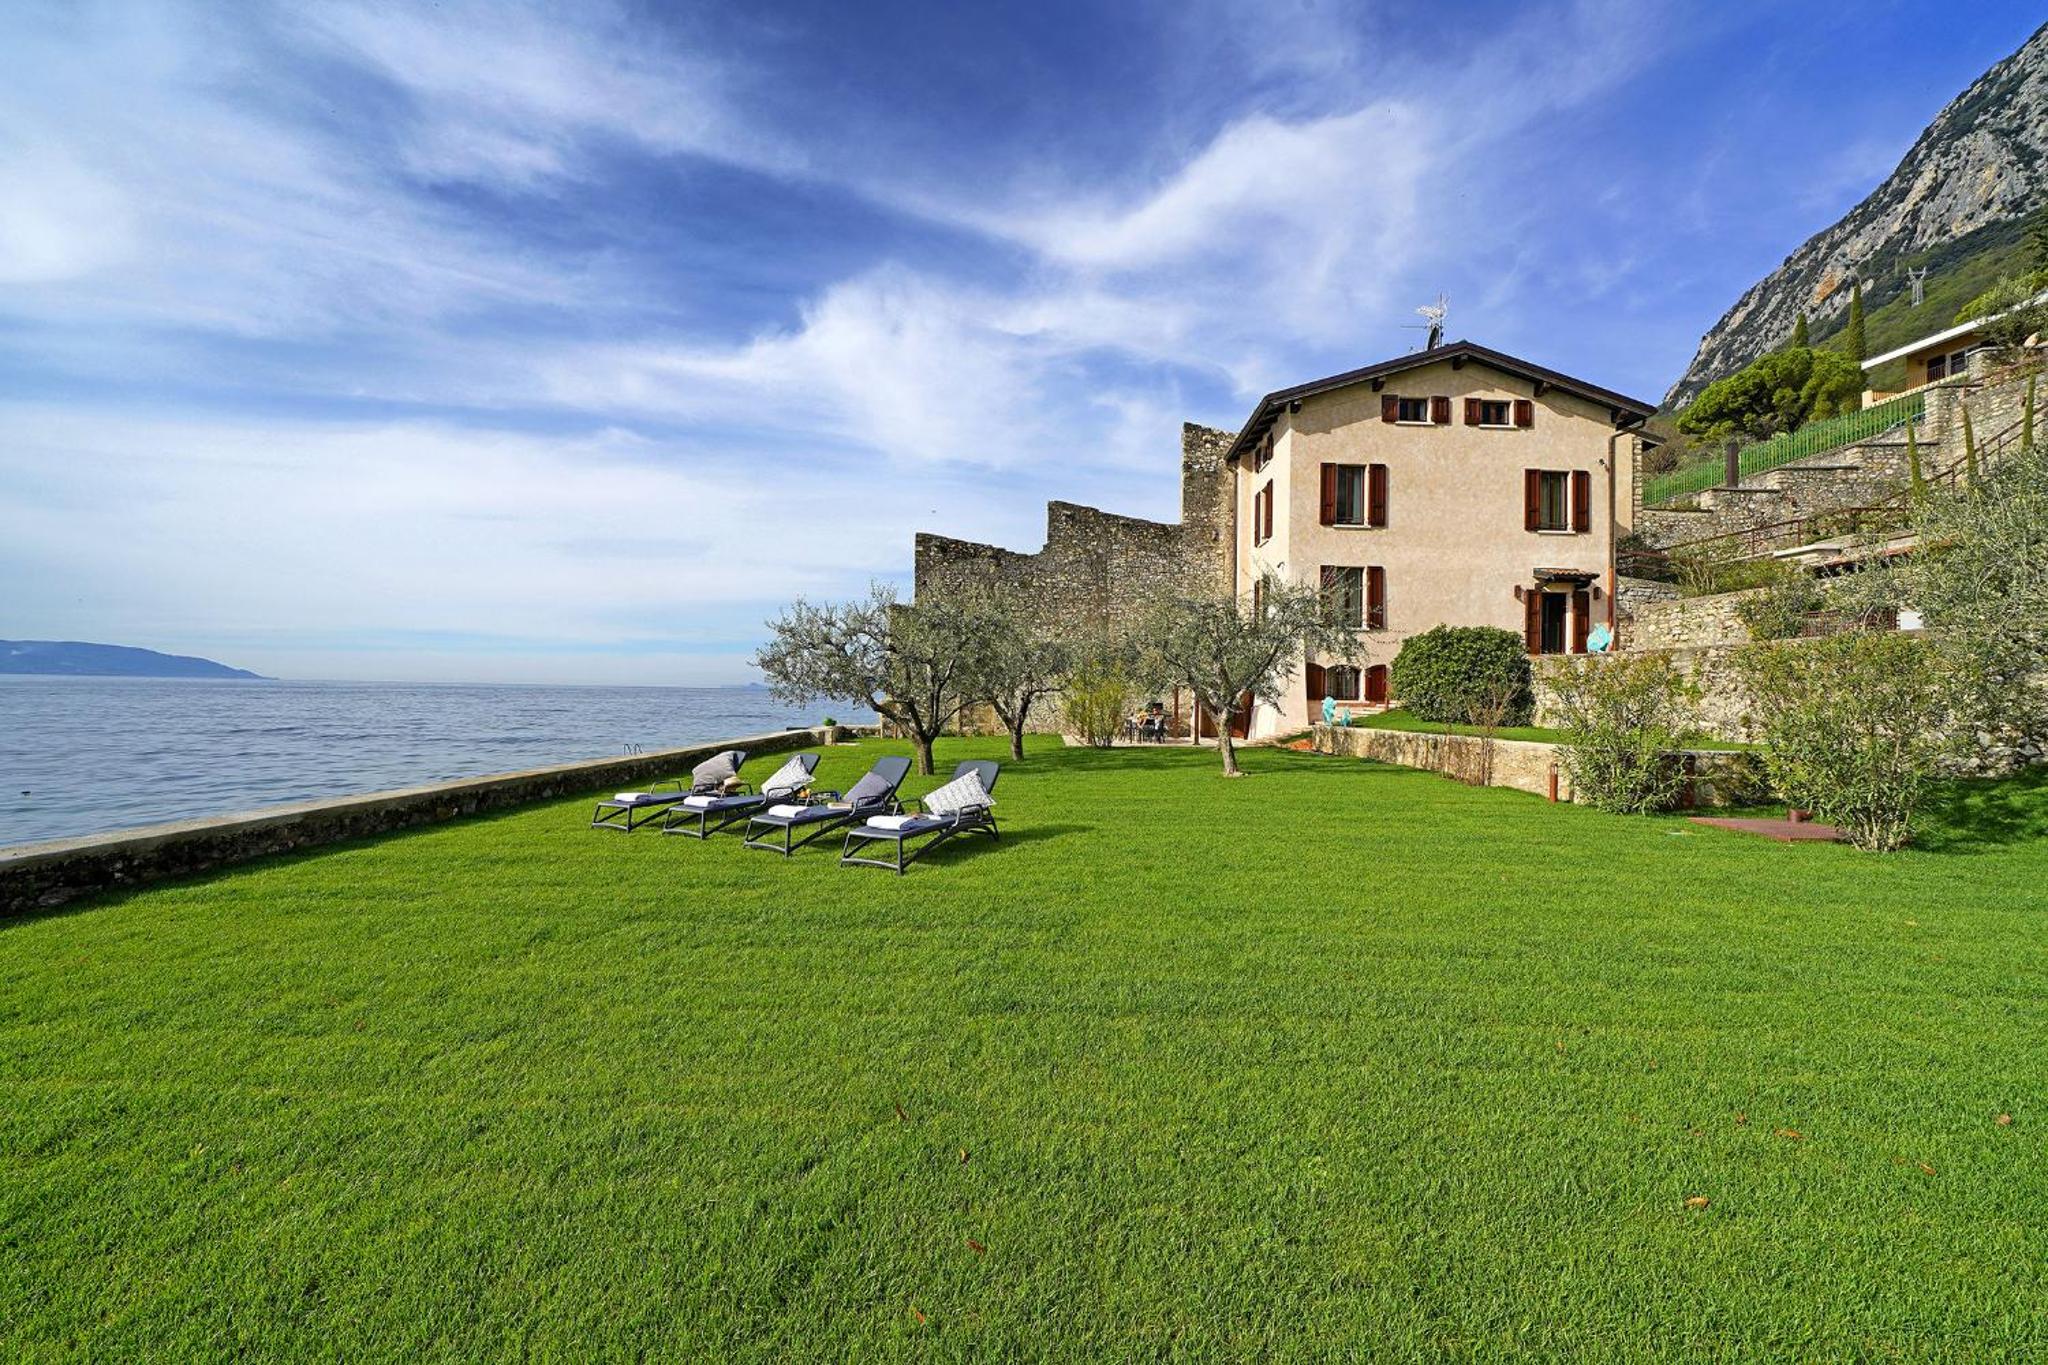 Villa Victoria: luxury waterfront villa with splendid views